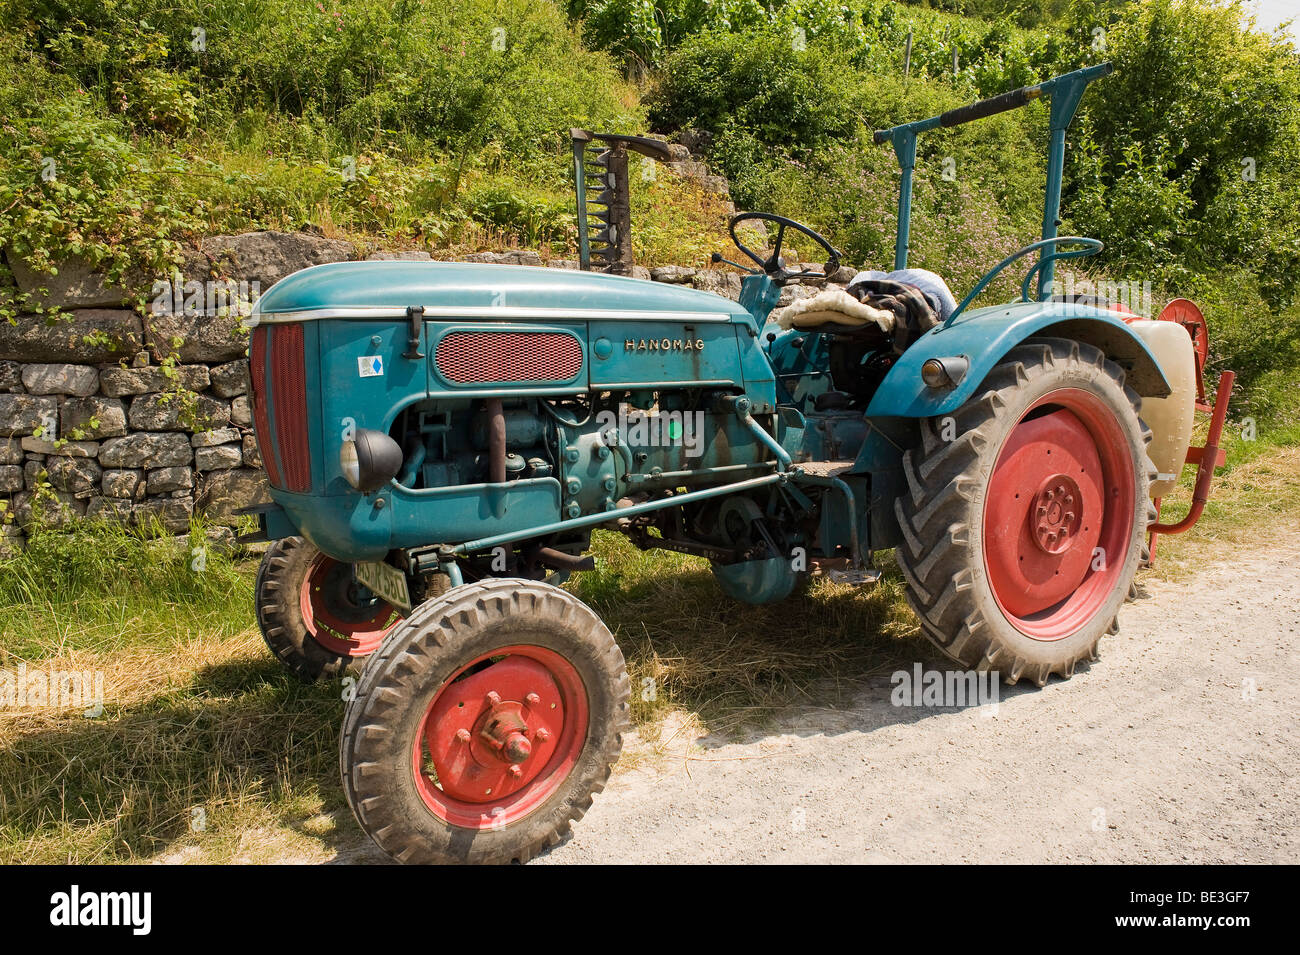 Hanomag traktor -Fotos und -Bildmaterial in hoher Auflösung – Alamy